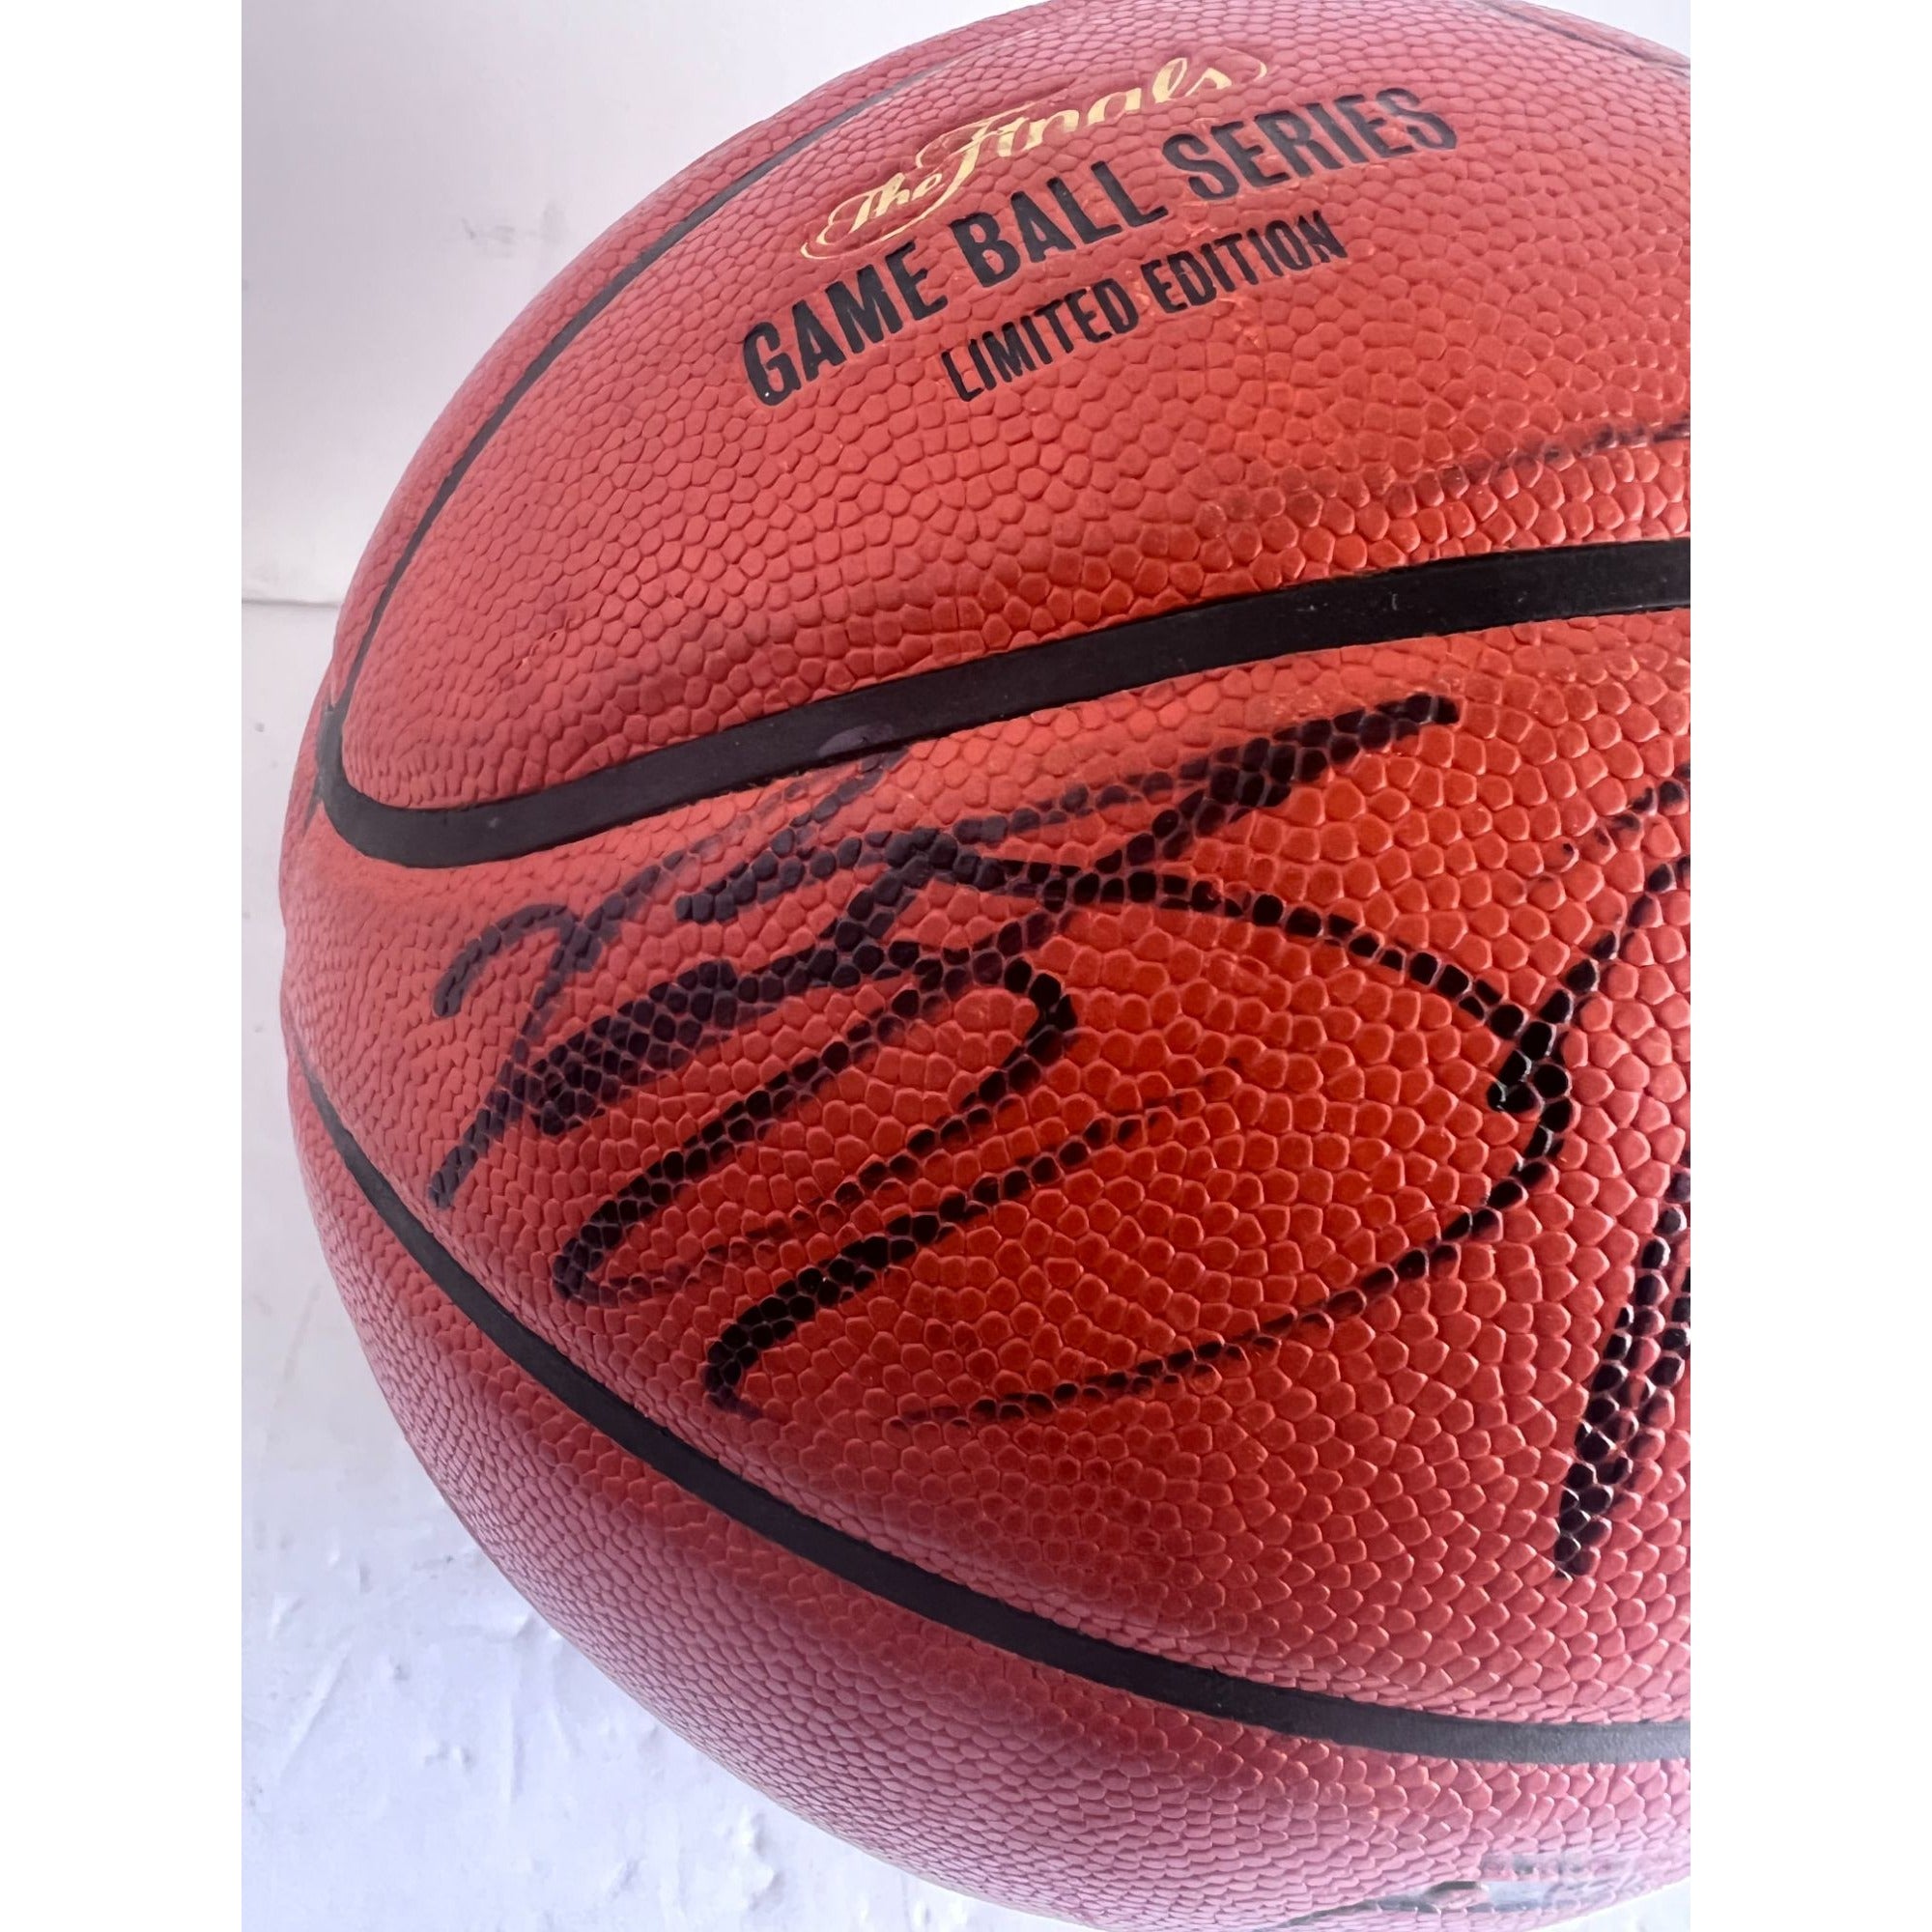 Michael Jordan Kobe Bryant LeBron James NBA Spalding game ball finals basketball signed with proof